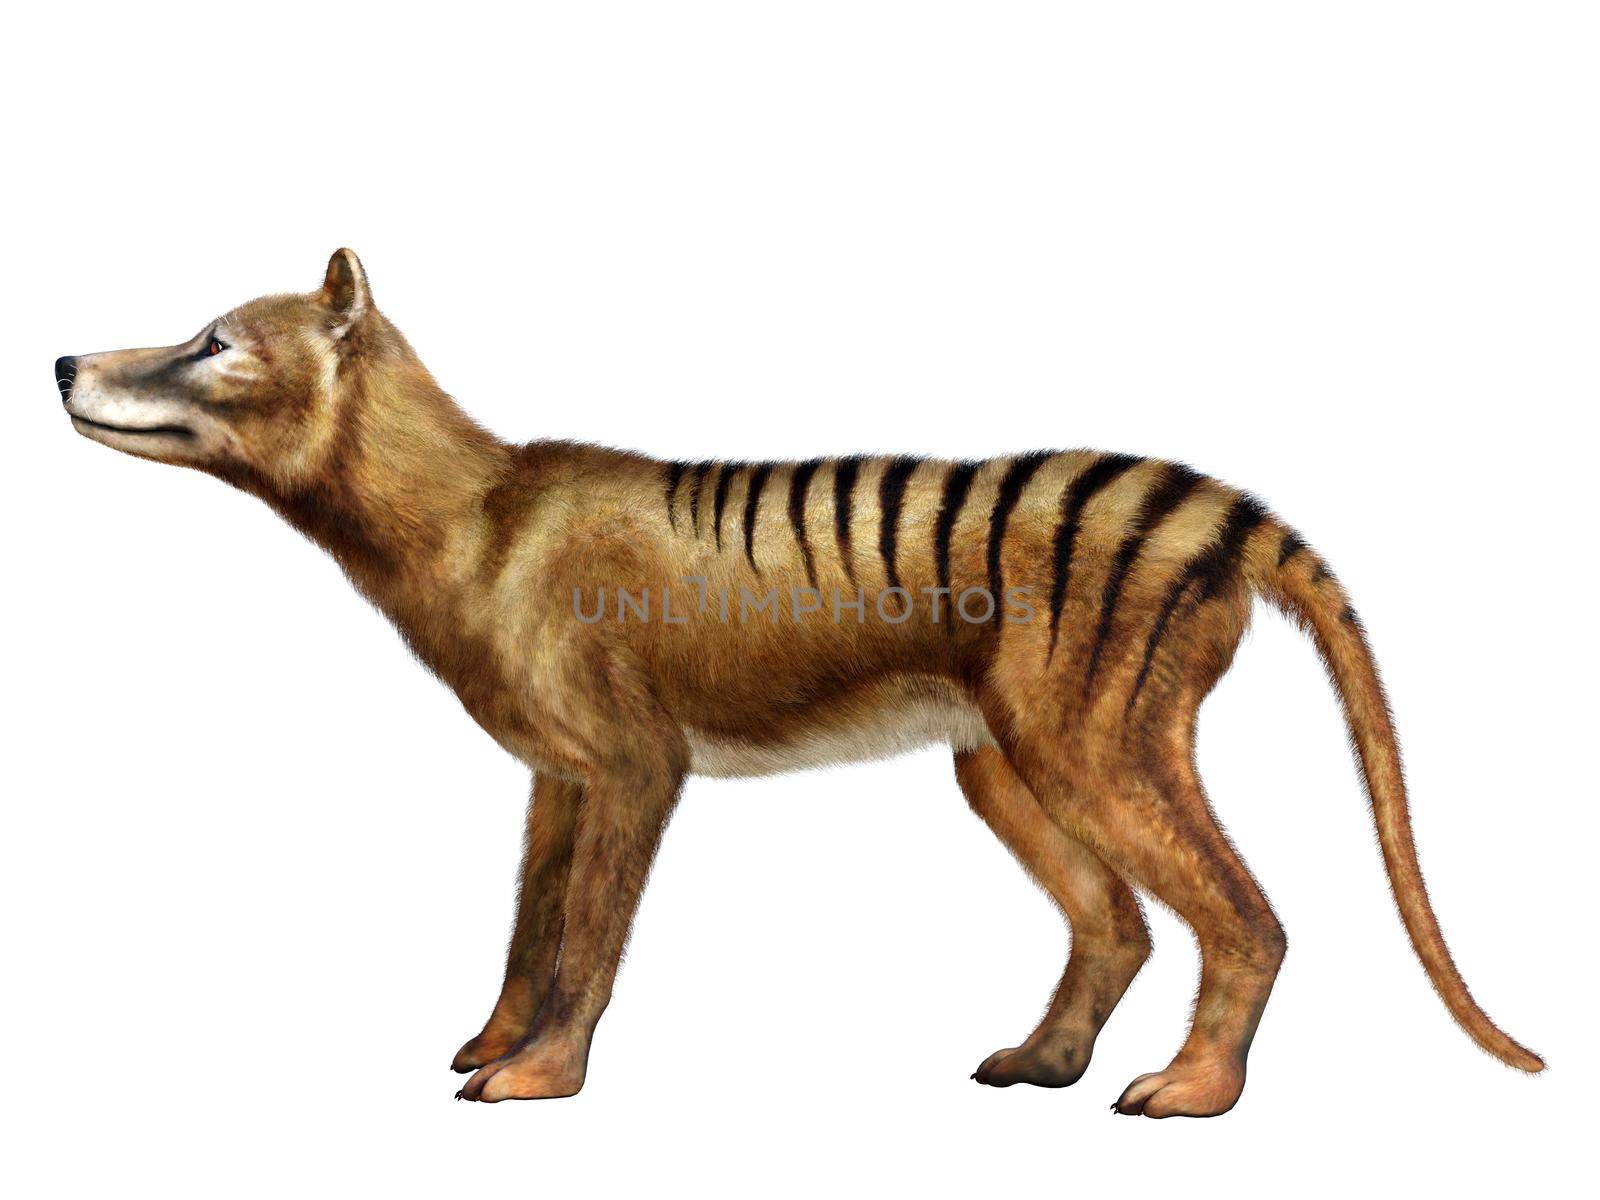 Thylacine Side Profile by Catmando